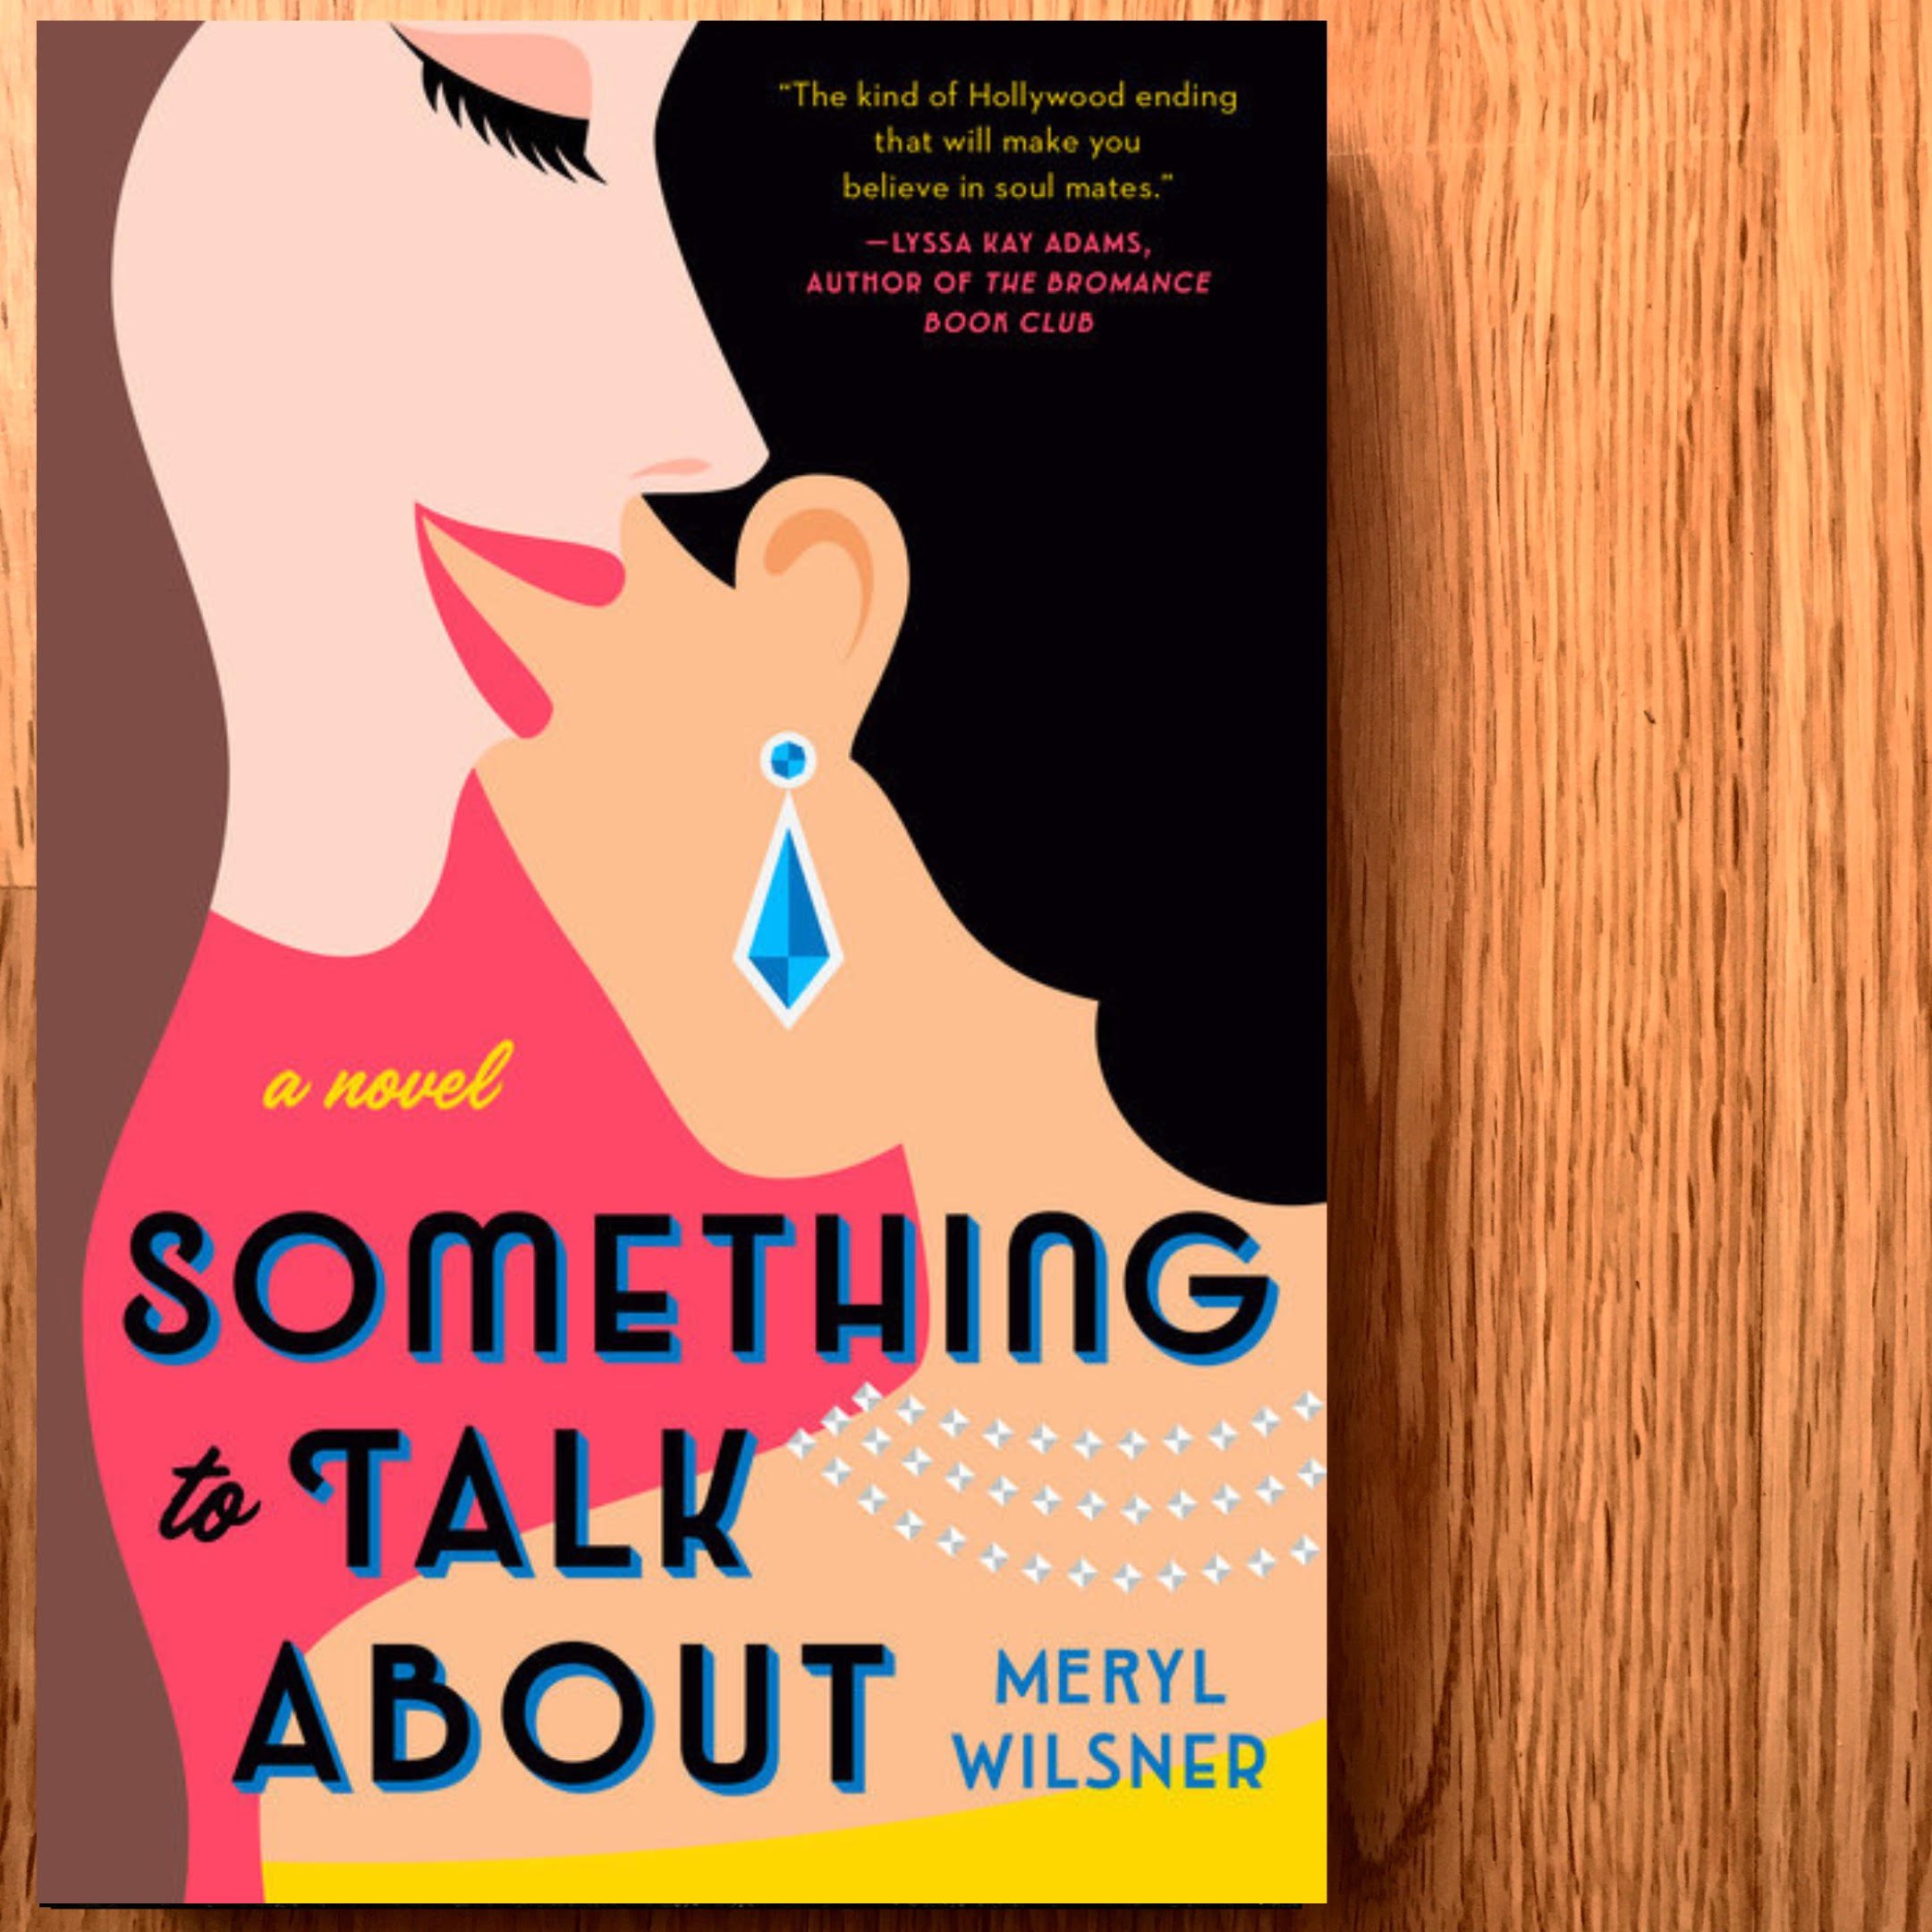 Something To Talk About — Meryl Wilsner